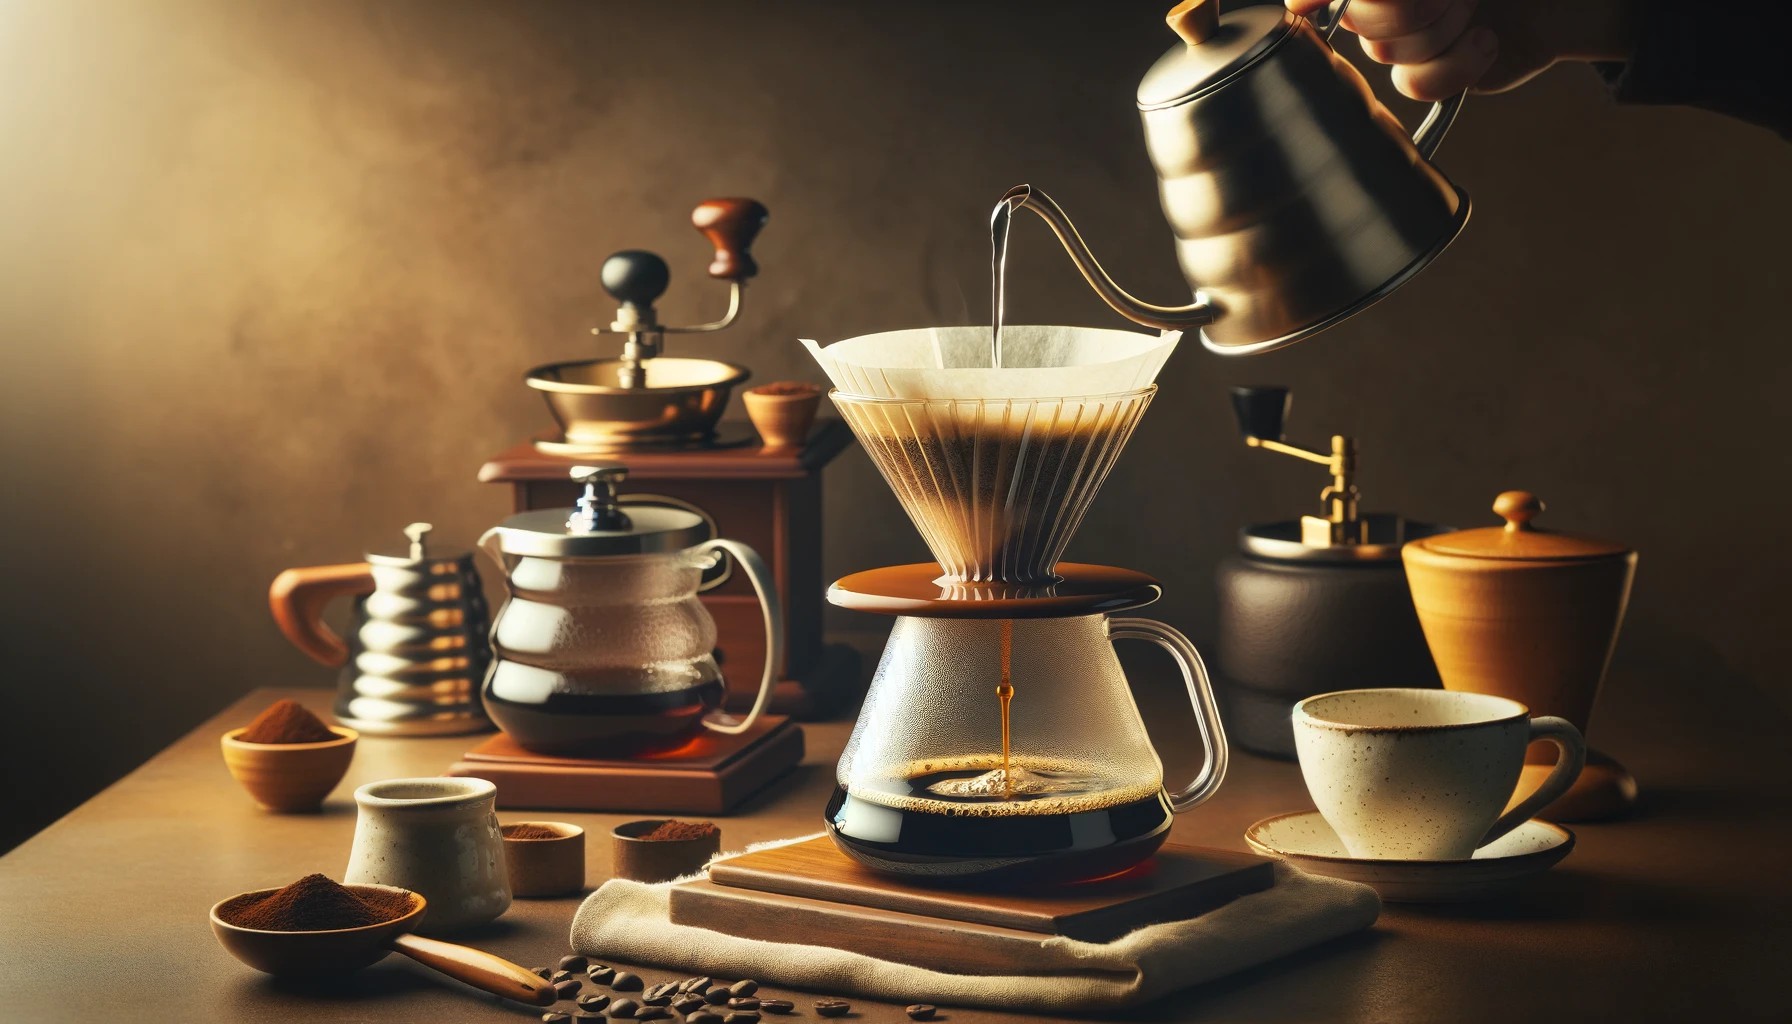 咖啡風味 阿拉比卡 羅布斯塔 烘焙程度 研磨度 萃取時間 Coffee Flavor Arabica Robusta Roast Level Grinding Extraction Time